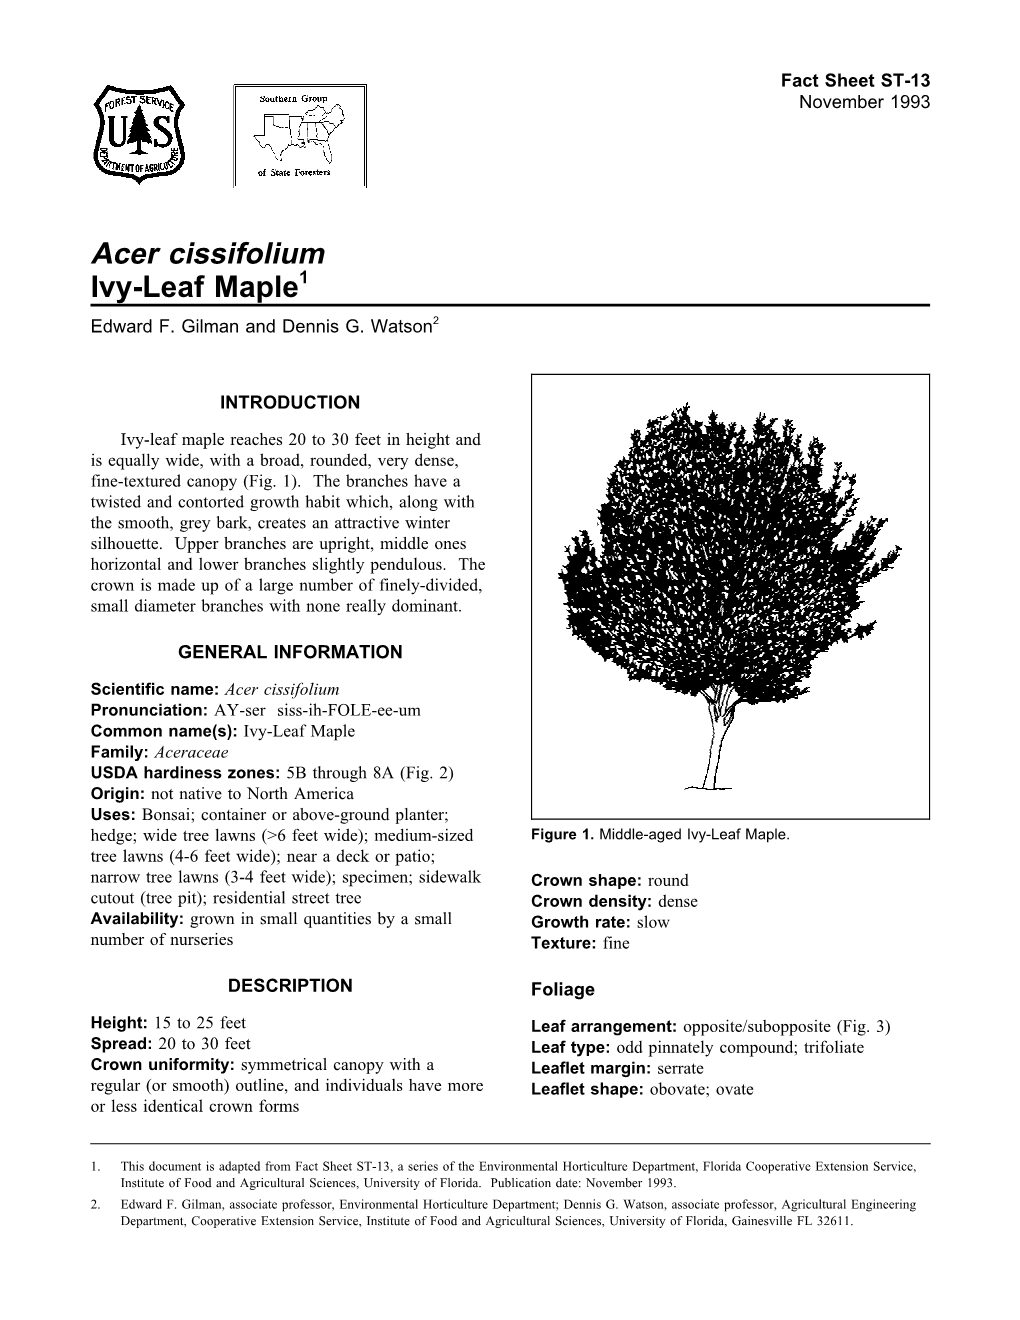 Acer Cissifolium Ivy-Leaf Maple1 Edward F